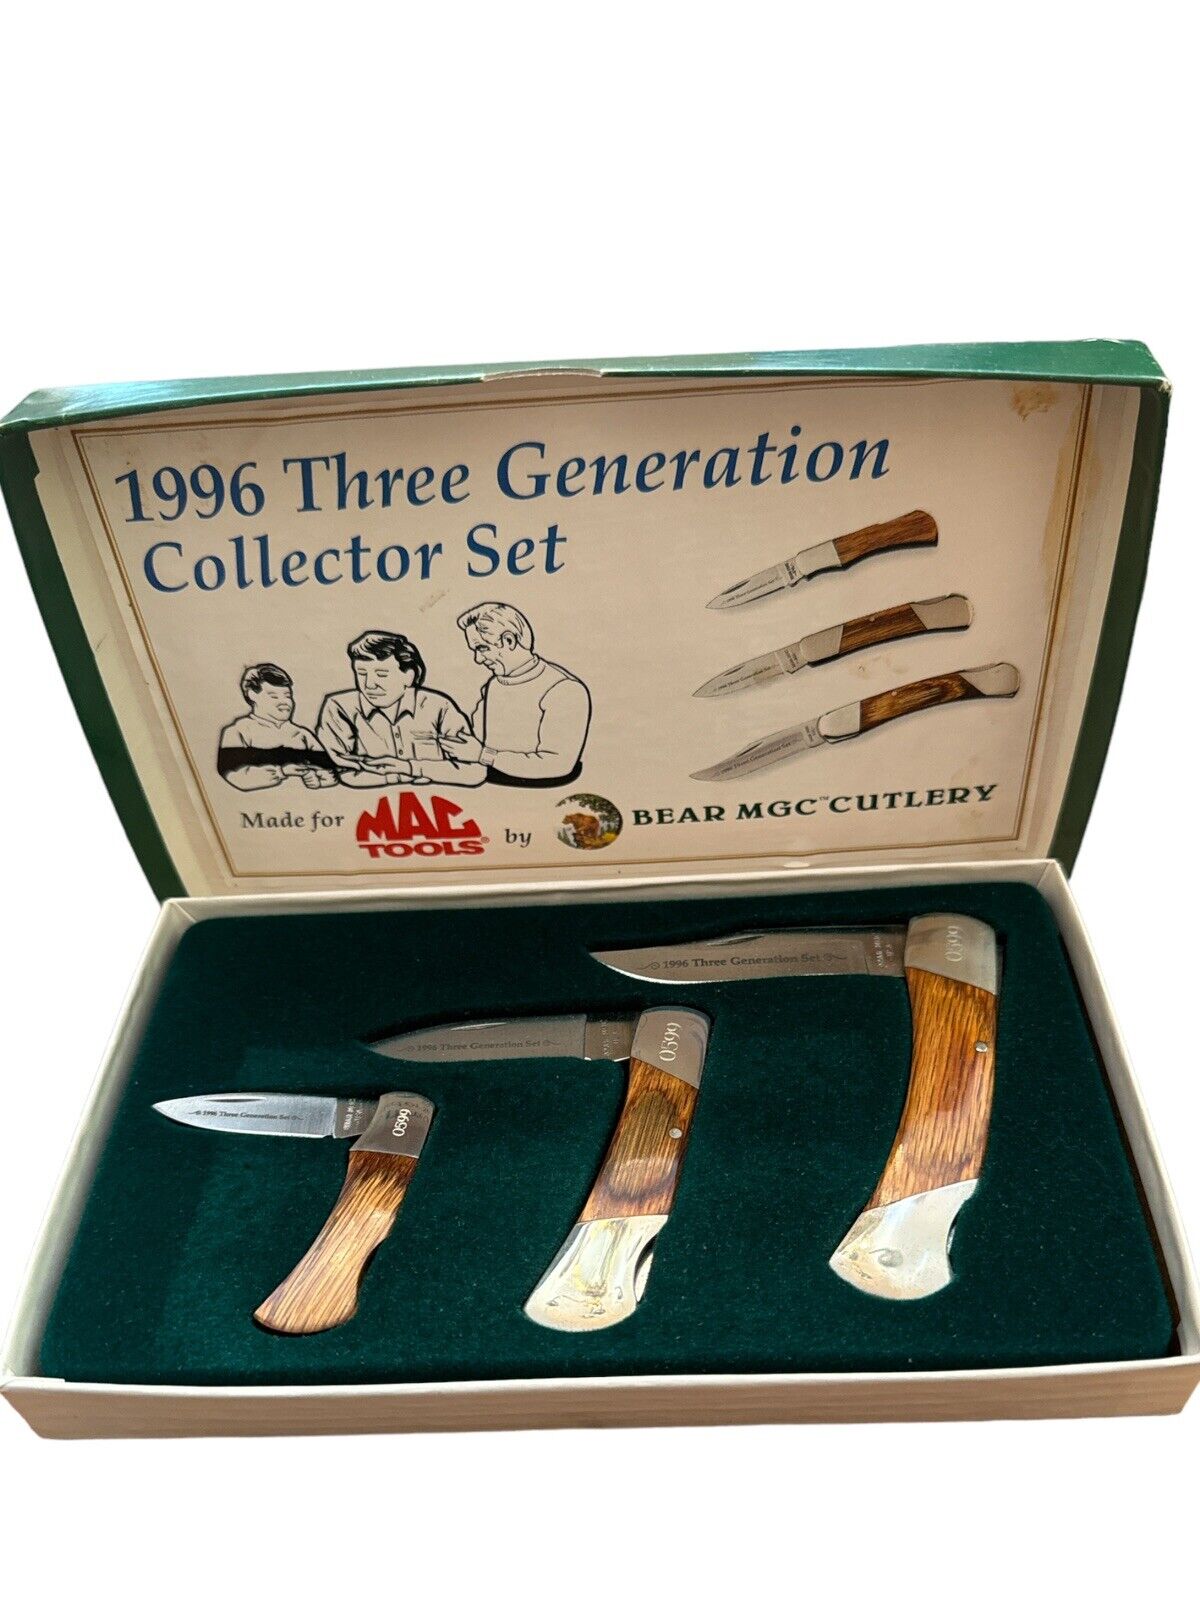 1996 Three Generation Collector set Pocket Knives Made for Mac Tools by Bear MGC